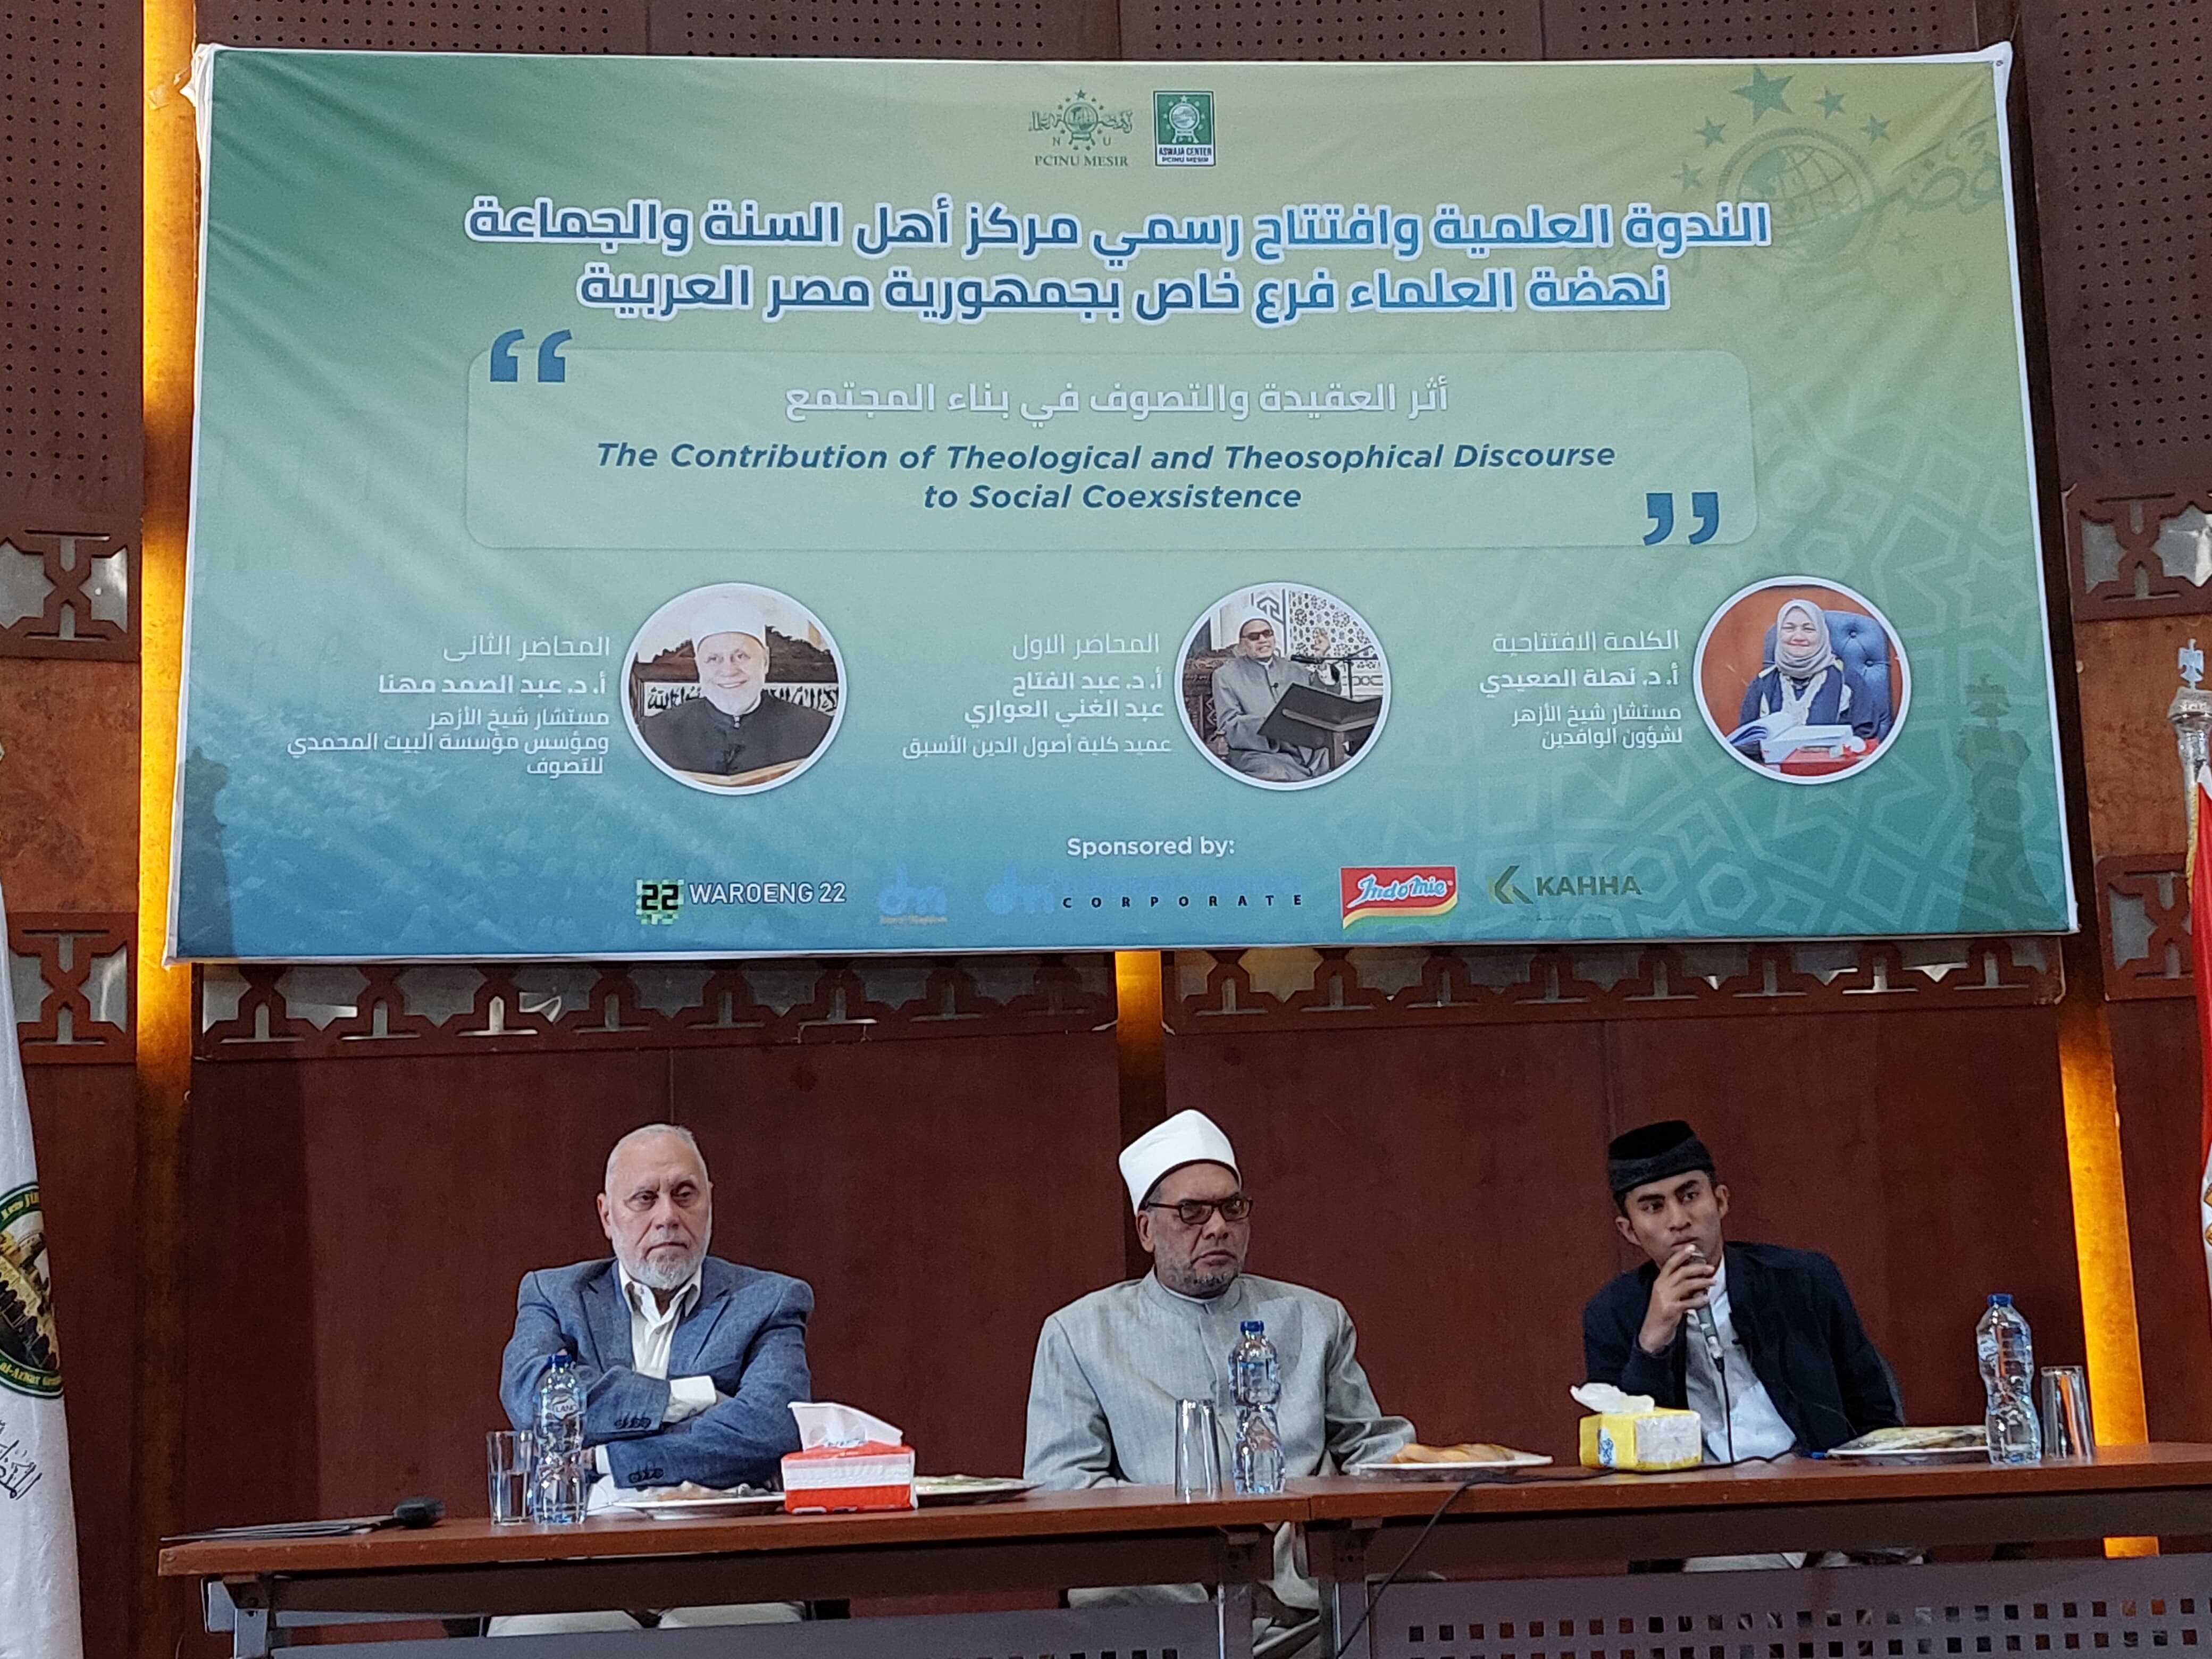 Peluncuran Aswaja Center PCINU Mesir, Lembaga yang Fokus Pengkajian Nilai-Nilai Keaswajaan